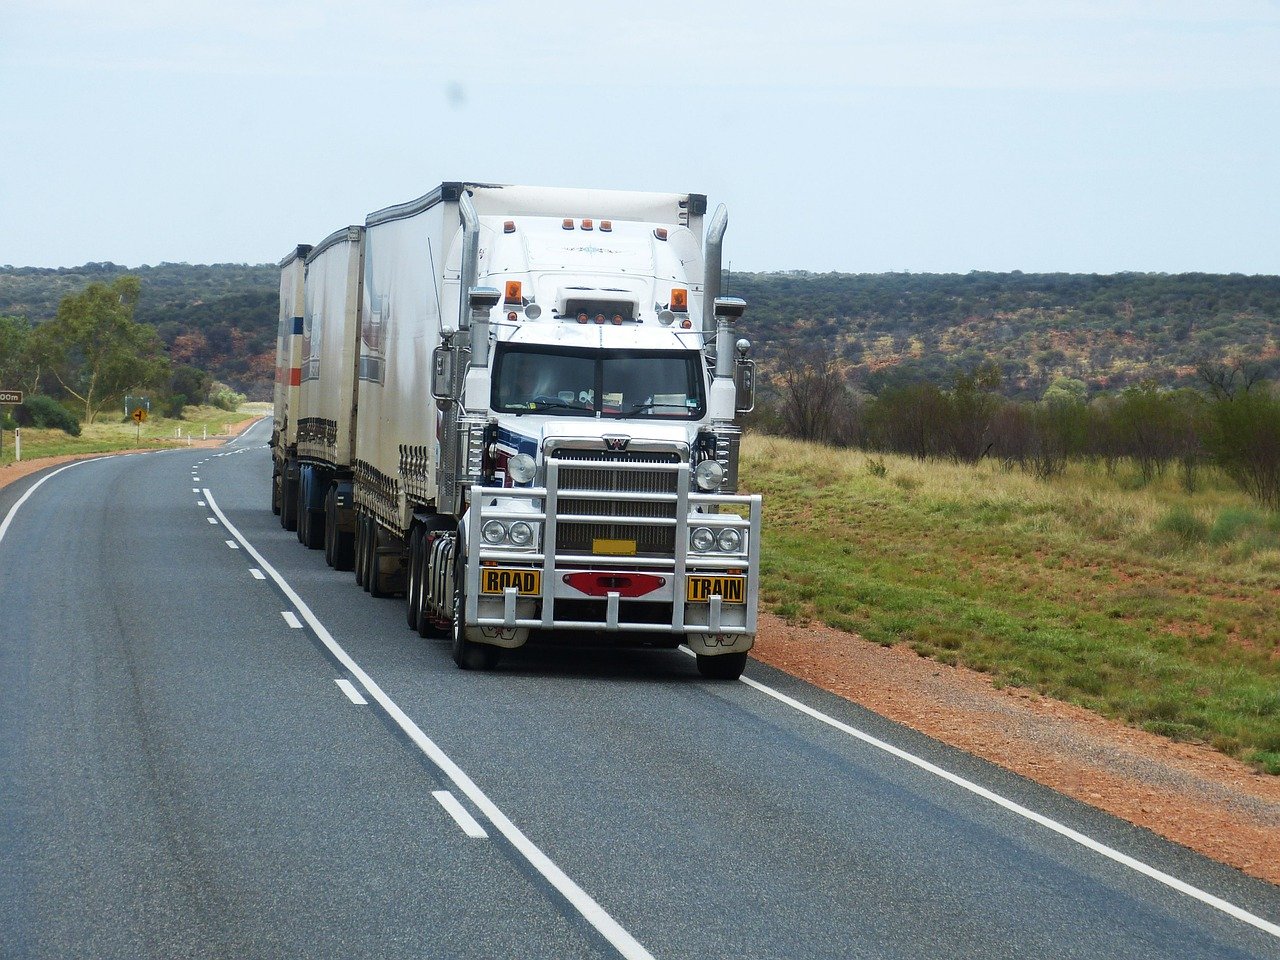 Three Recent Road Accidents: Why Are Crashes Involving Semi-Trucks So Often Fatal?